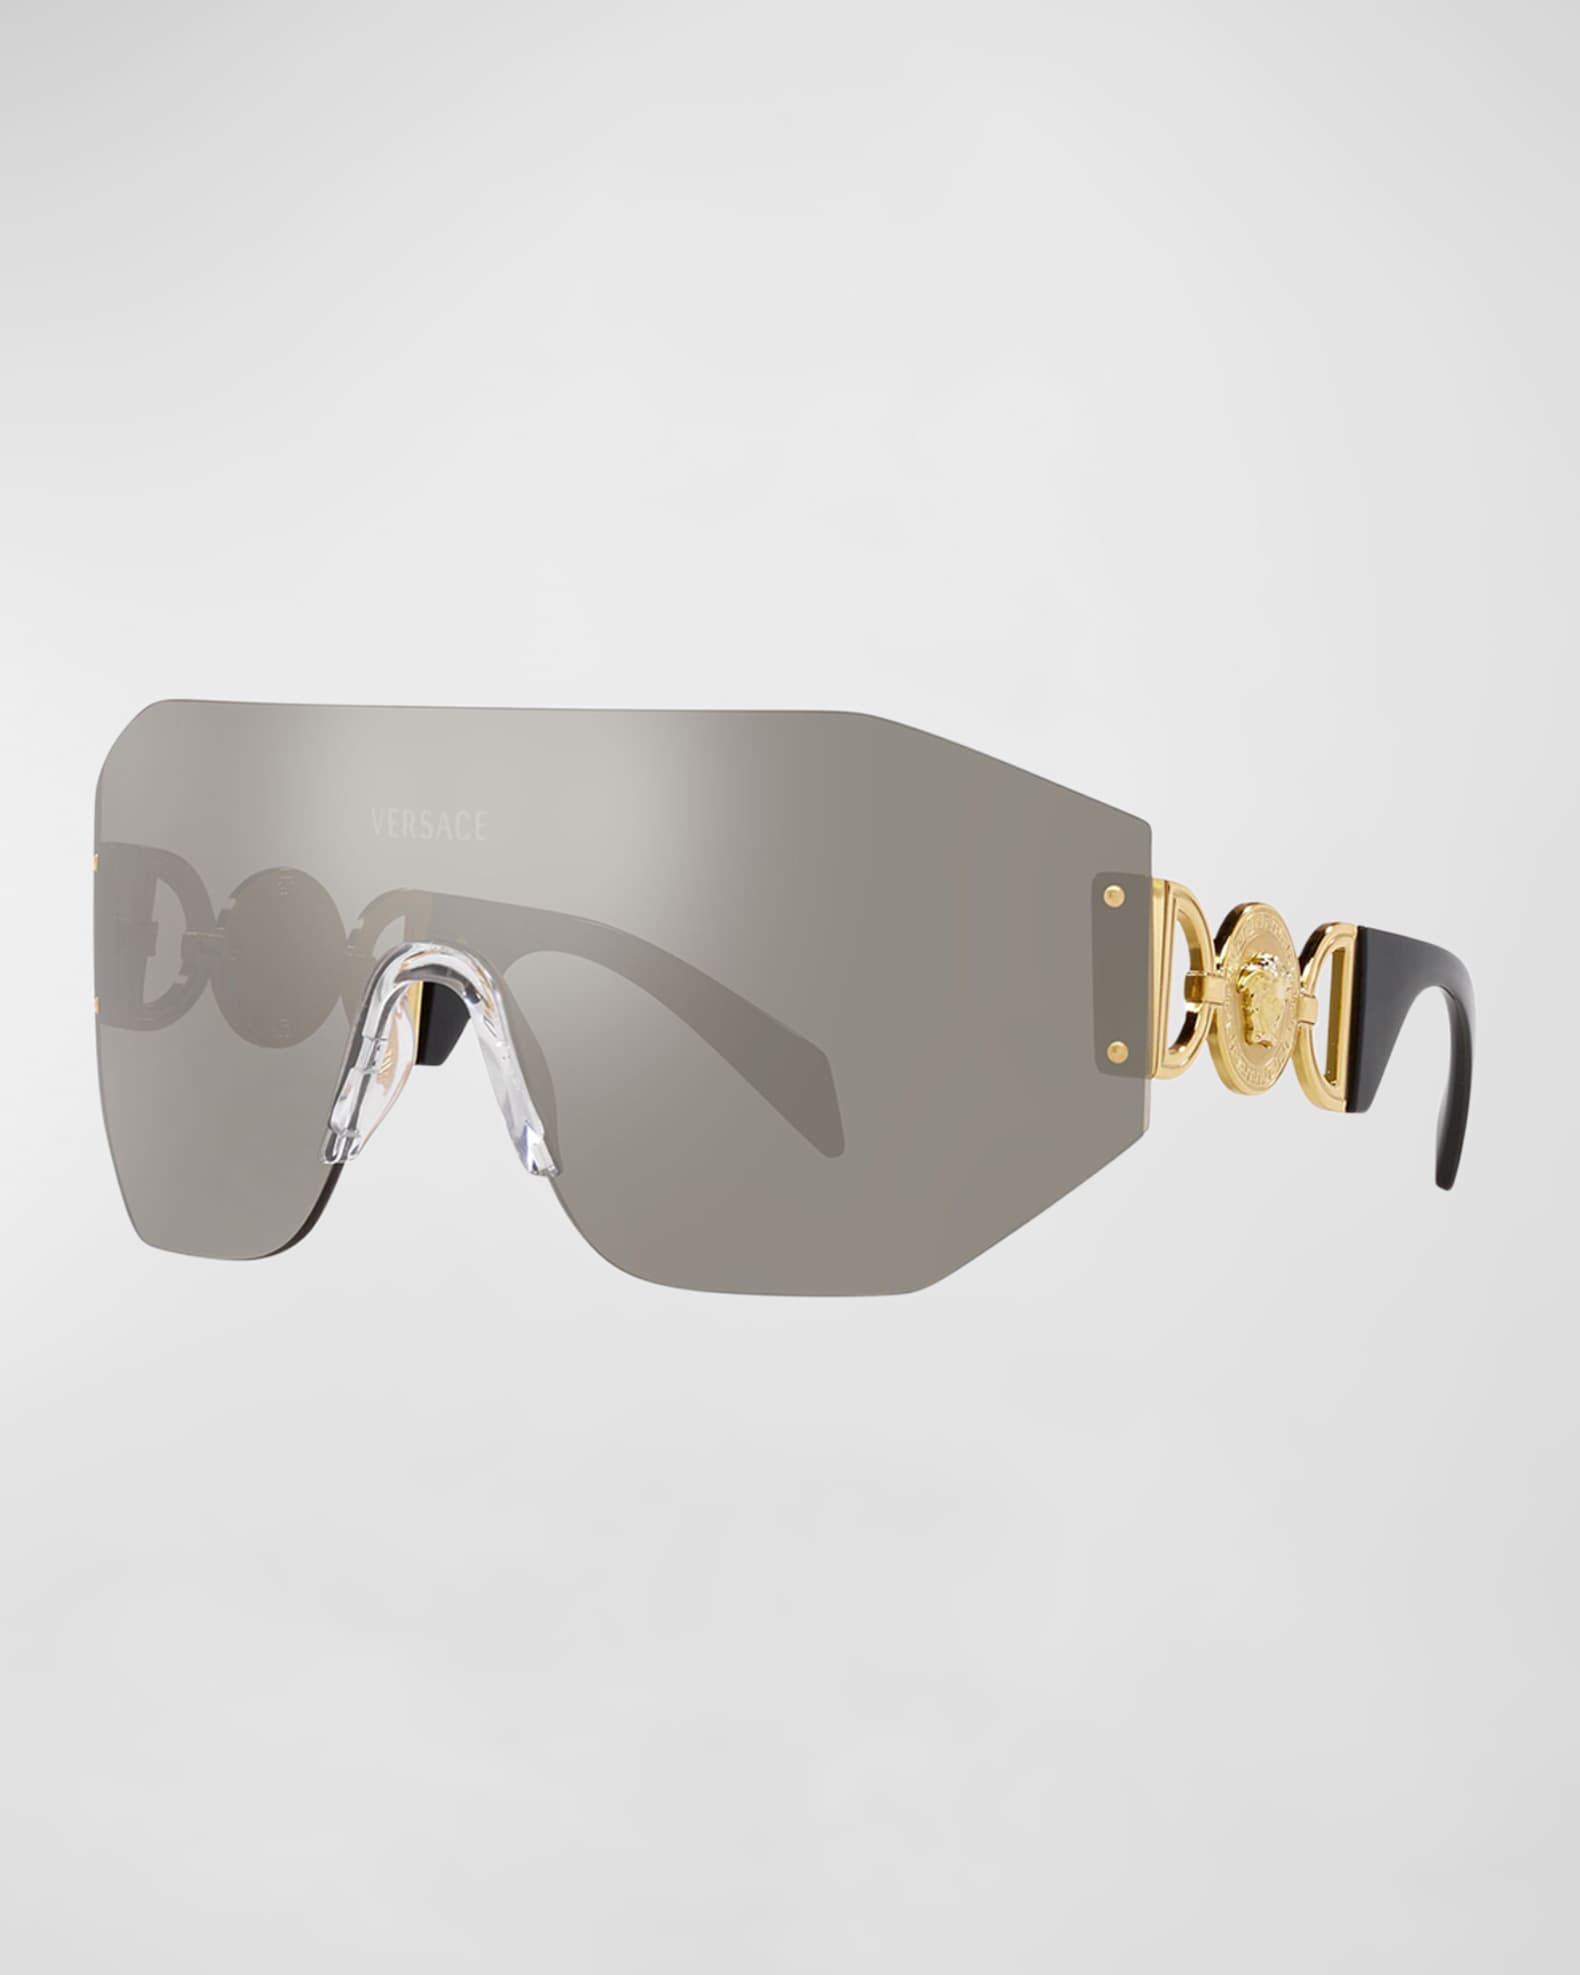 Versace Women's Shield Sunglasses, Silver/Grey, One Size